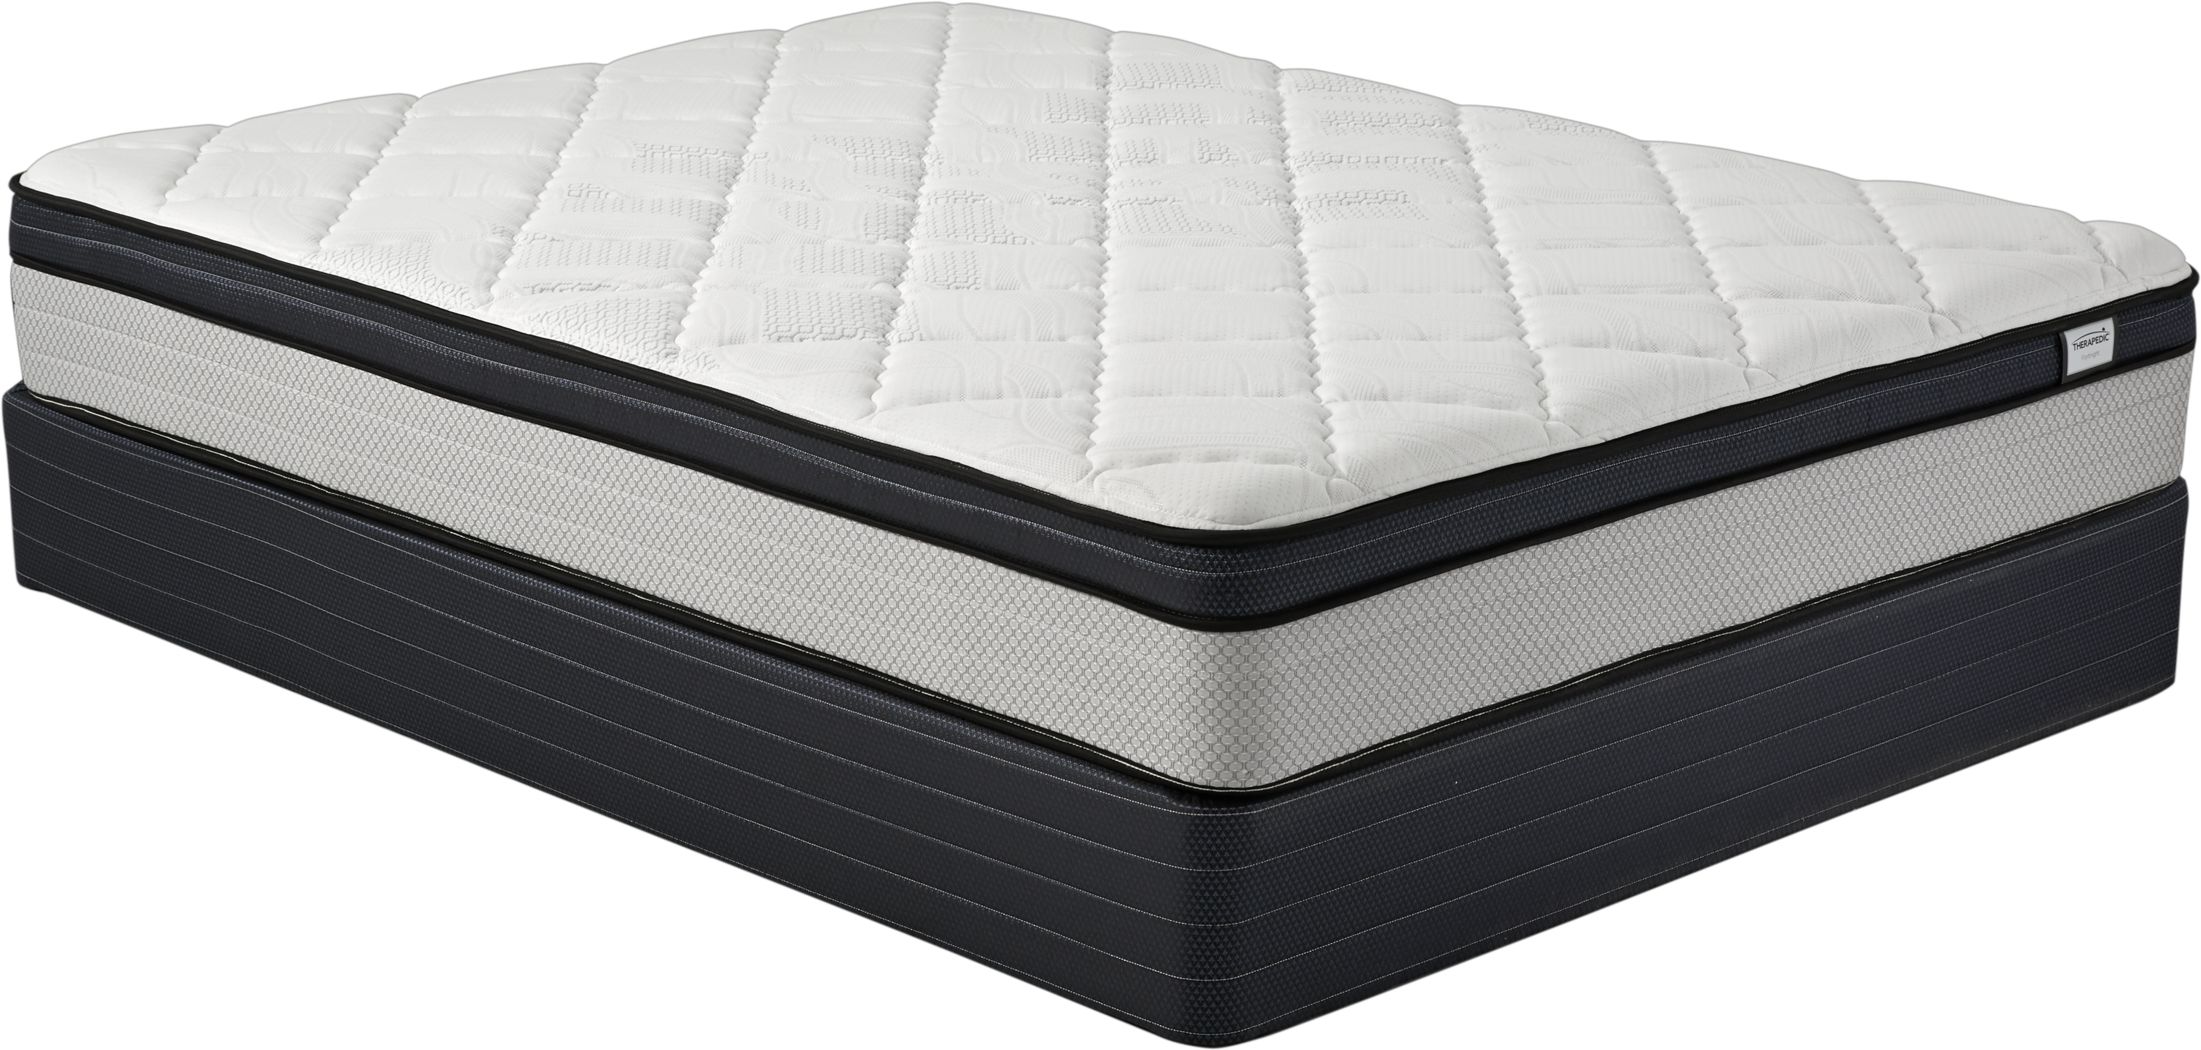 therapedic balmoral queen mattress set